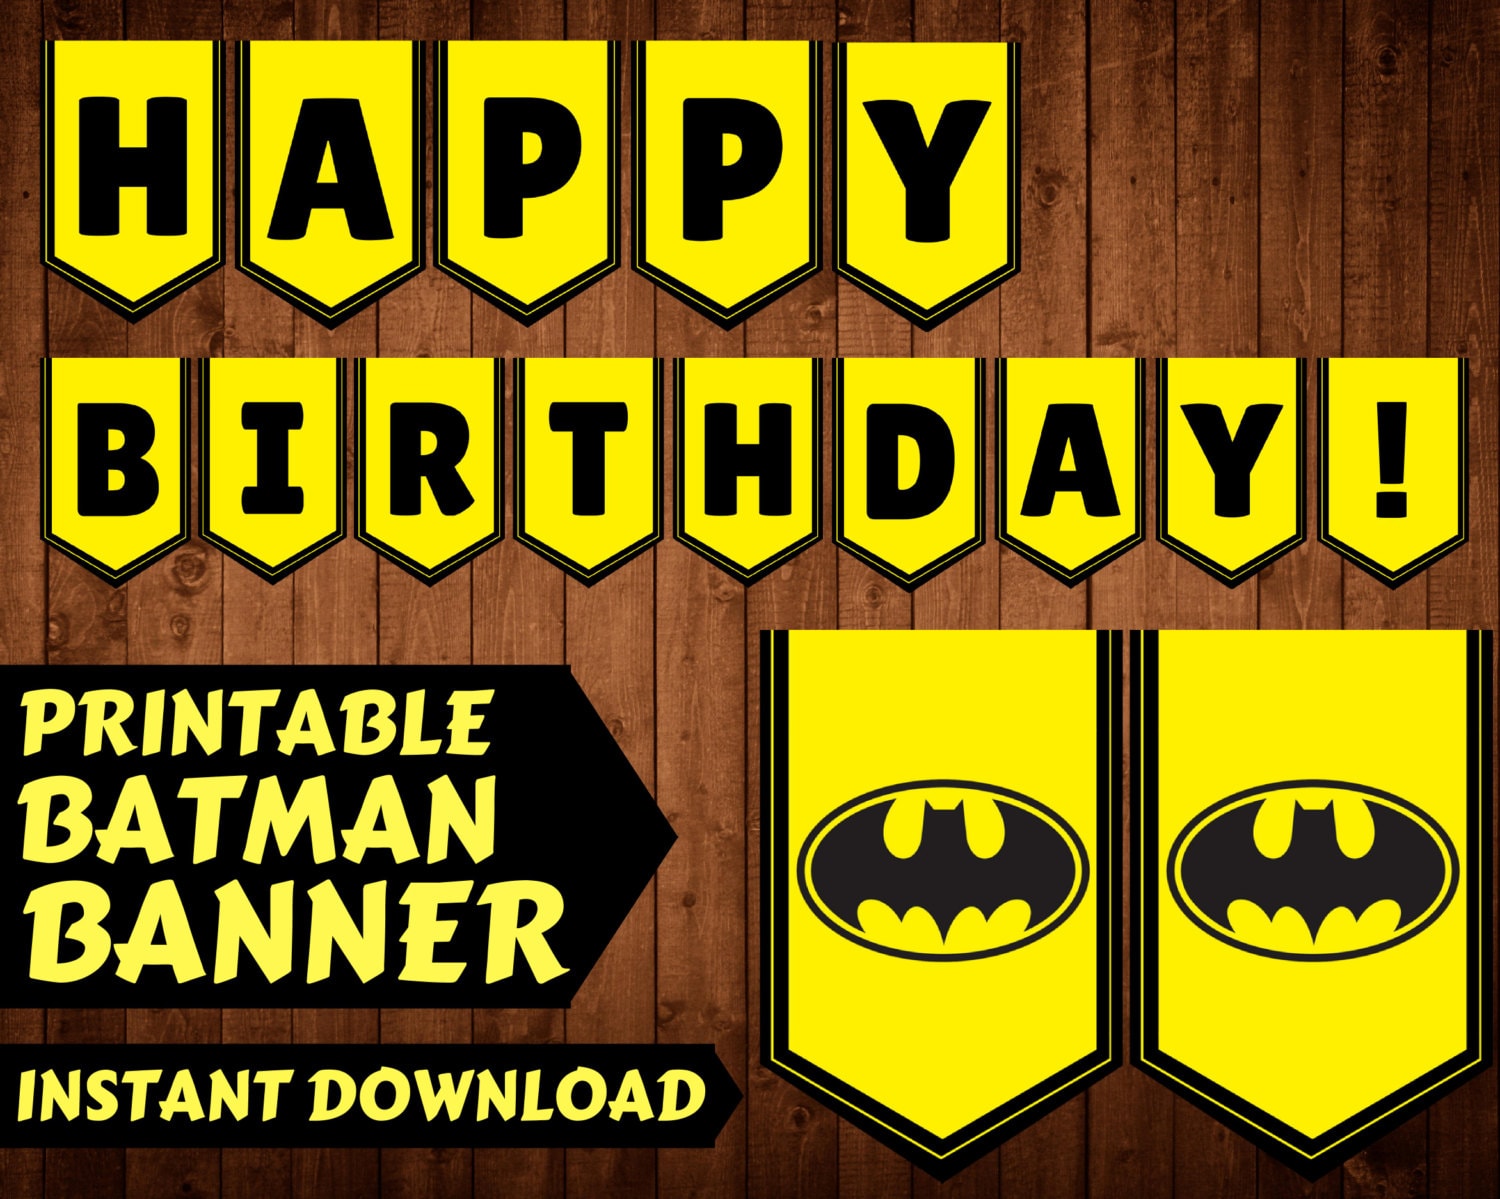 Batman Banner Batman Birthday Banner Batman by CrosleyDesigns